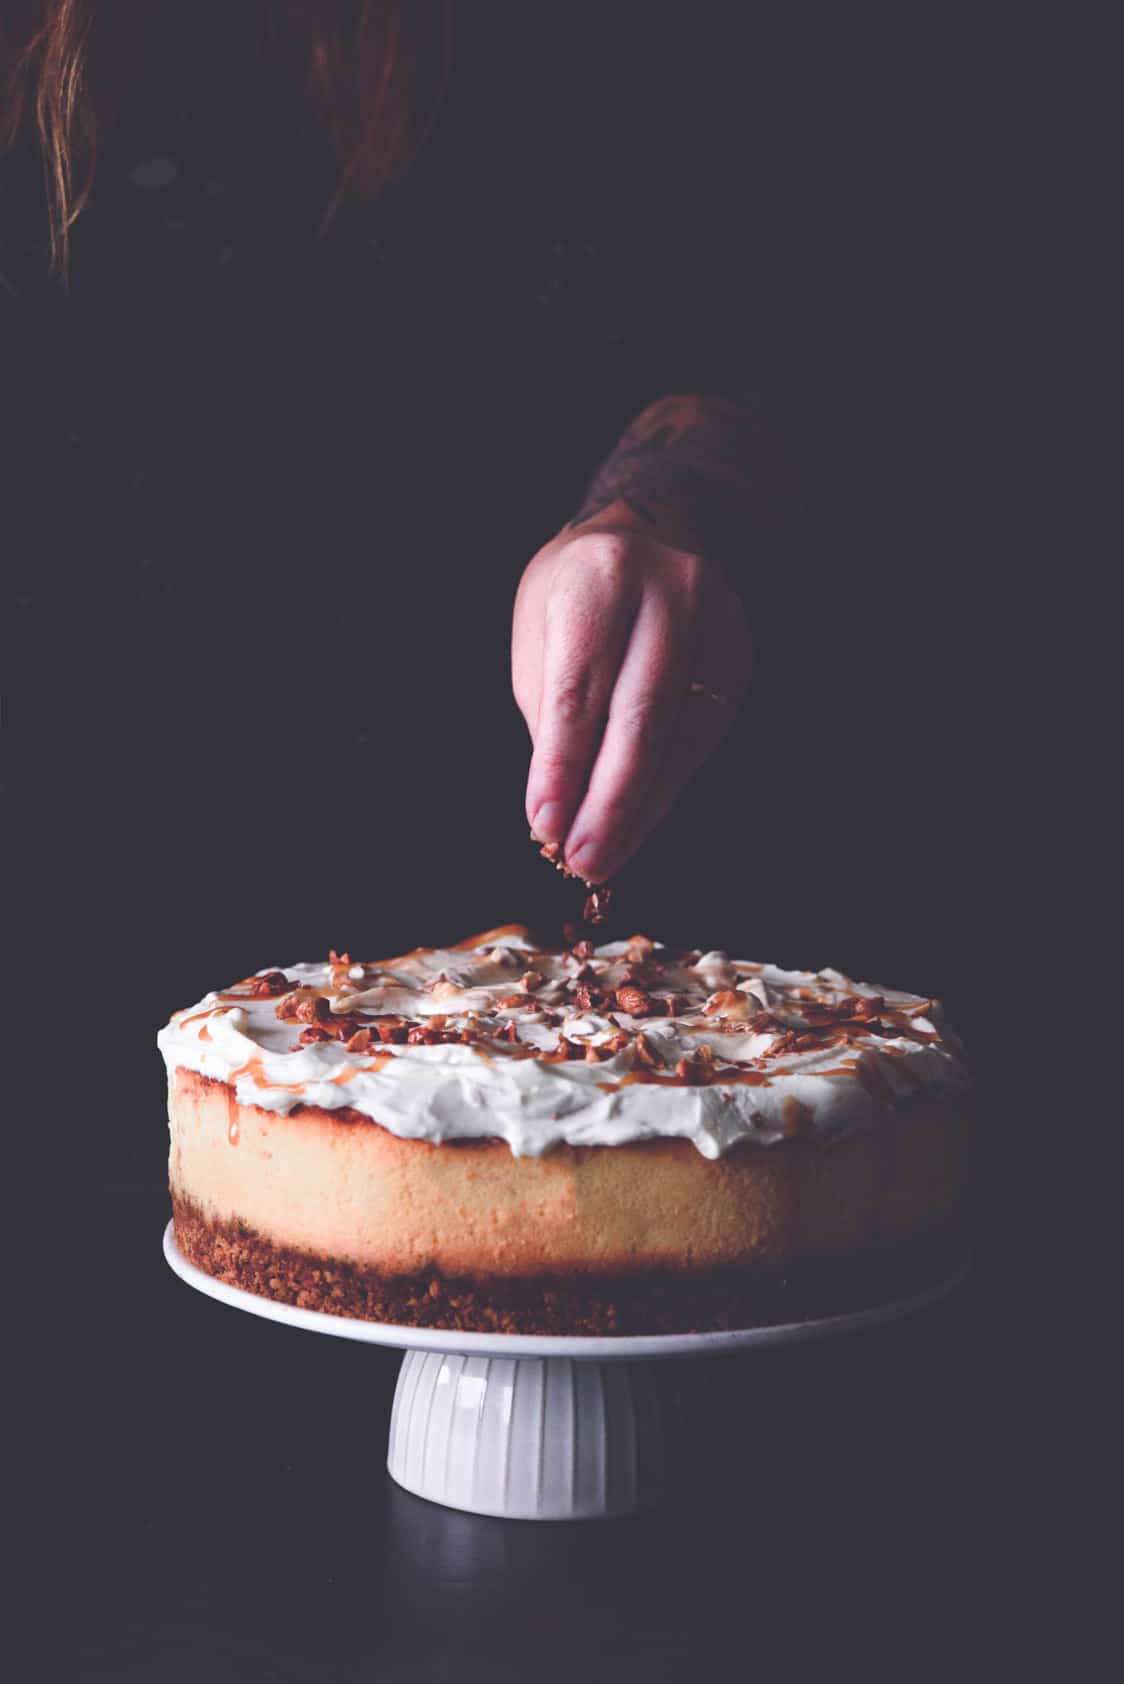 moody food photo cheesecake - confitbanane